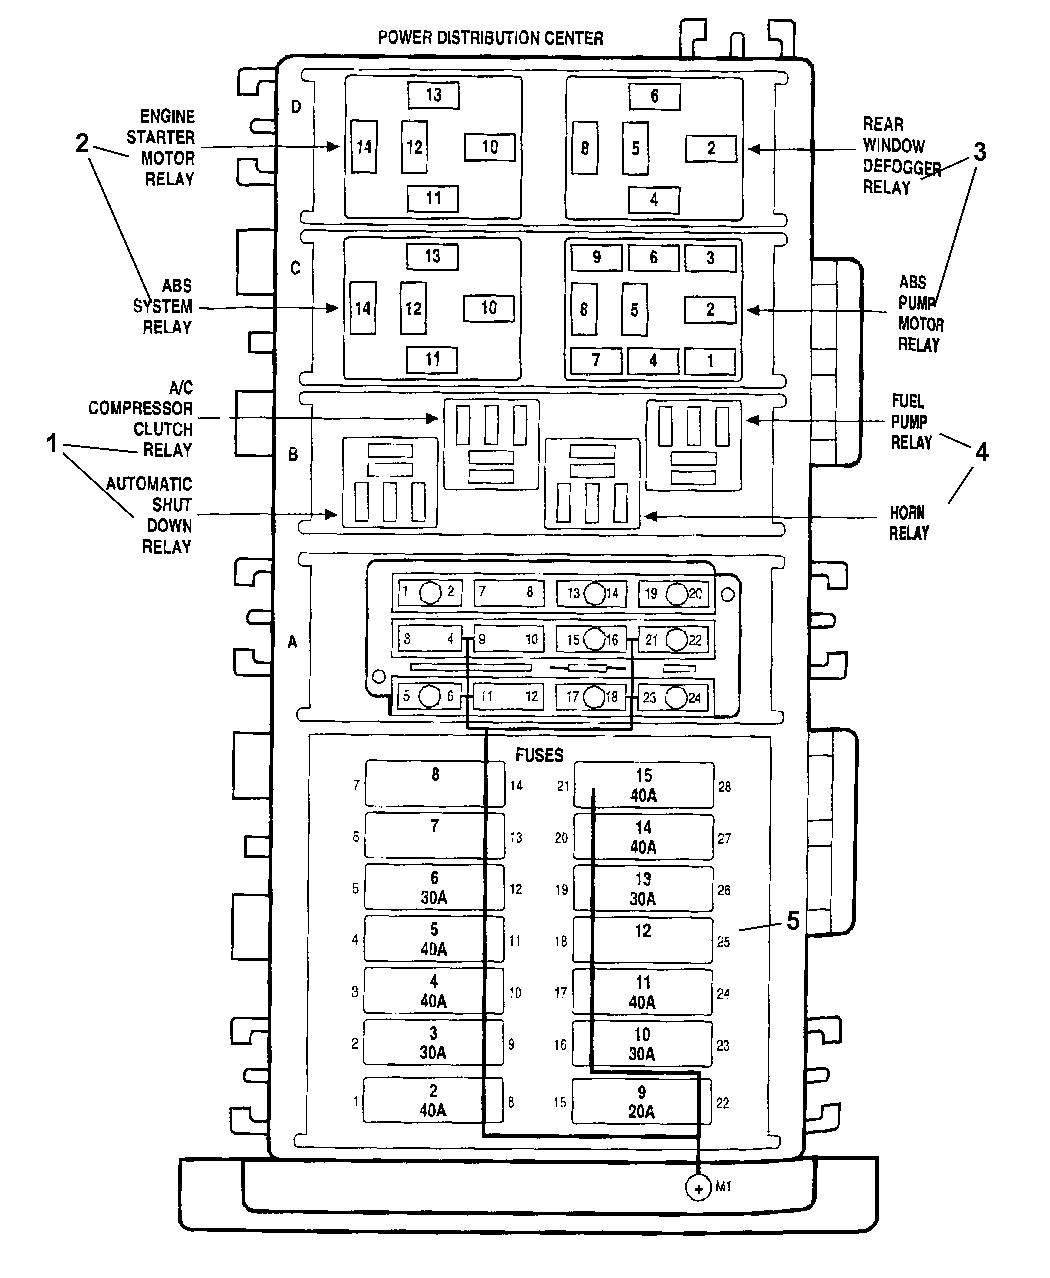 1999 Jeep Wrangler Tj Fuse Box Diagram - Wiring Diagram Schemas